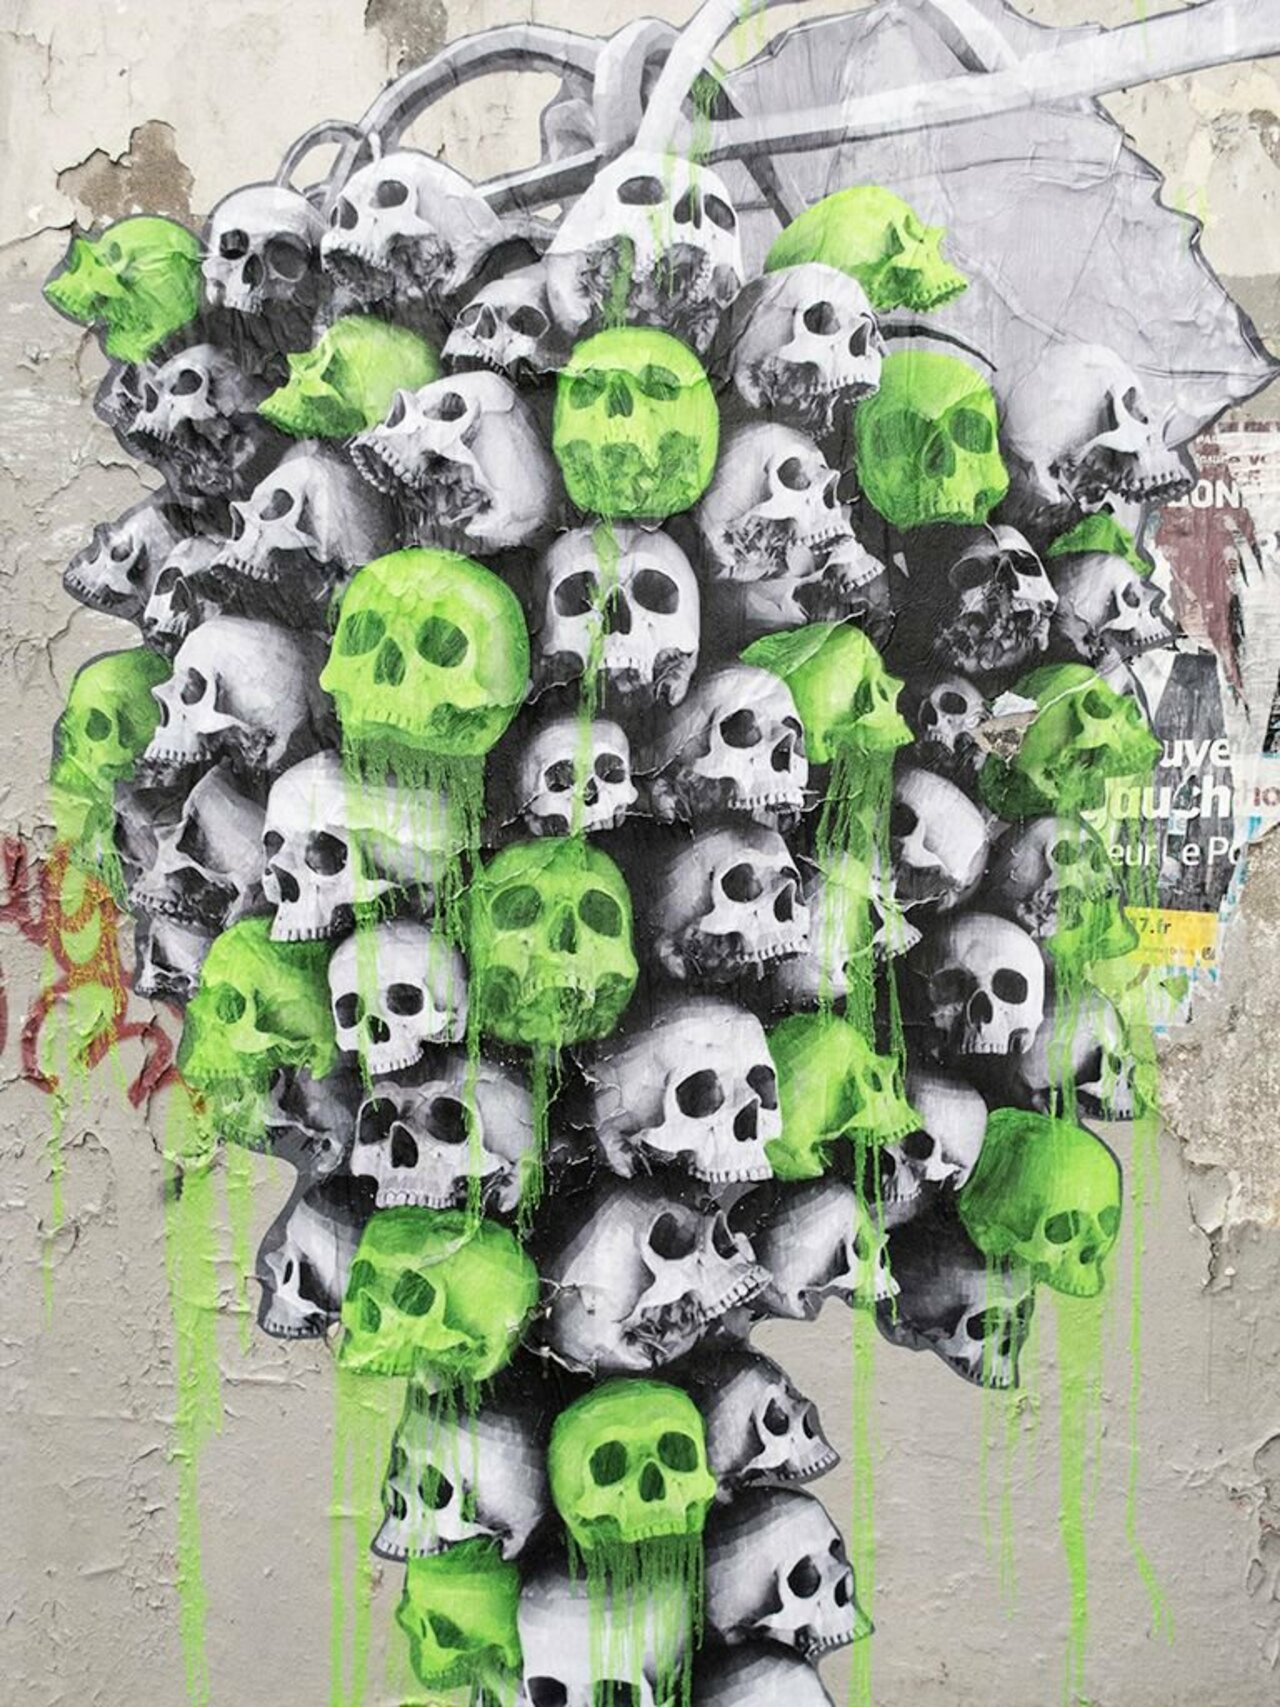 New pieces by Ludo in Paris, France #streetart #mural #graffiti #art https://t.co/ROa0peE6nS